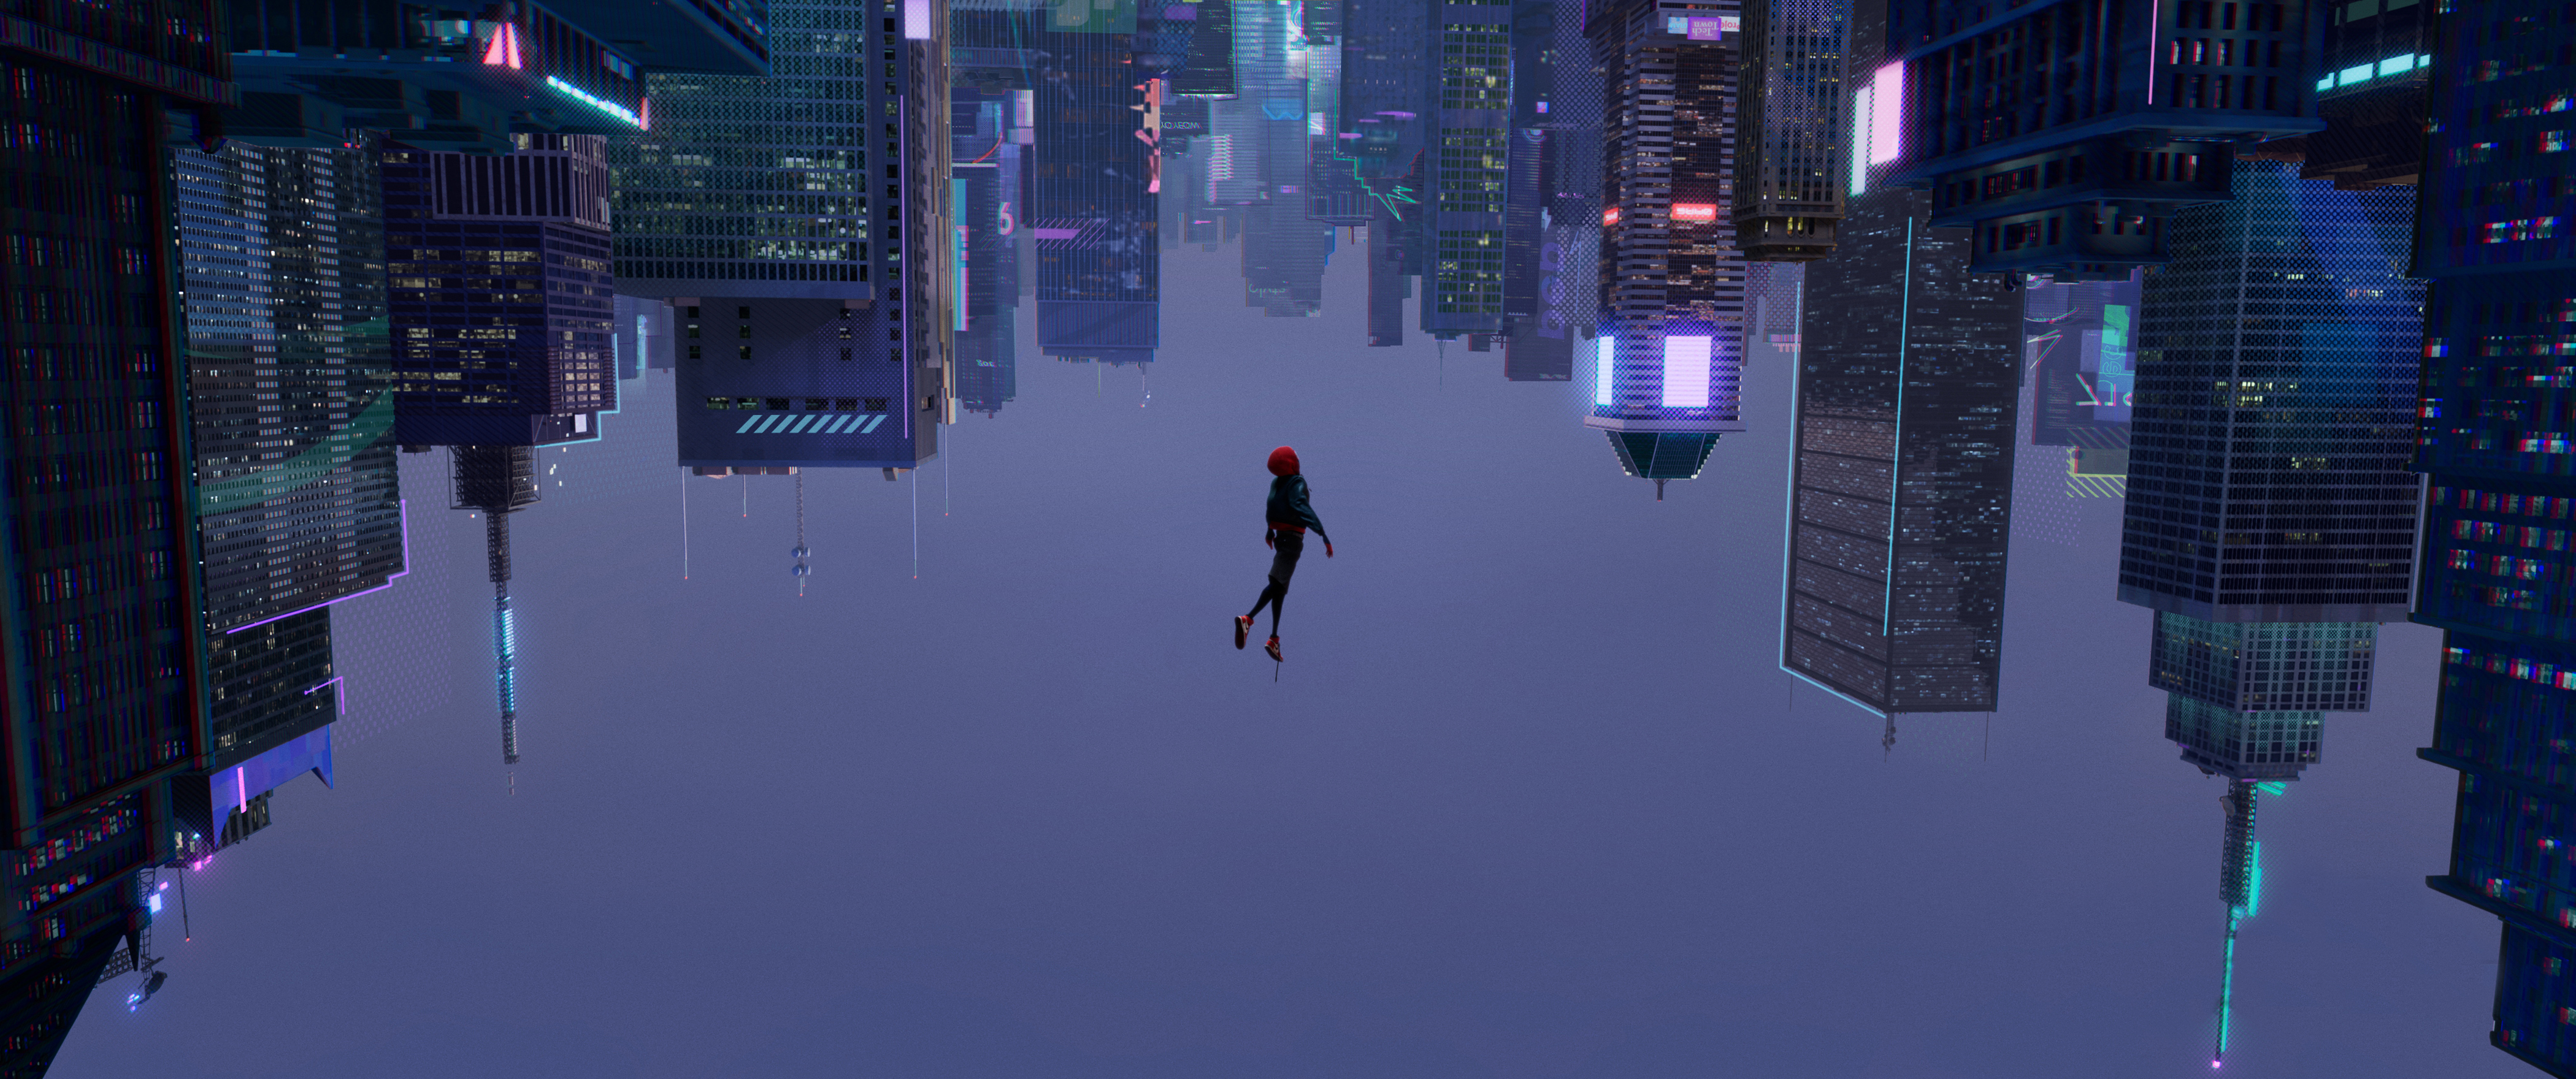 HQ Spider Man: Into The Spider Verse Background